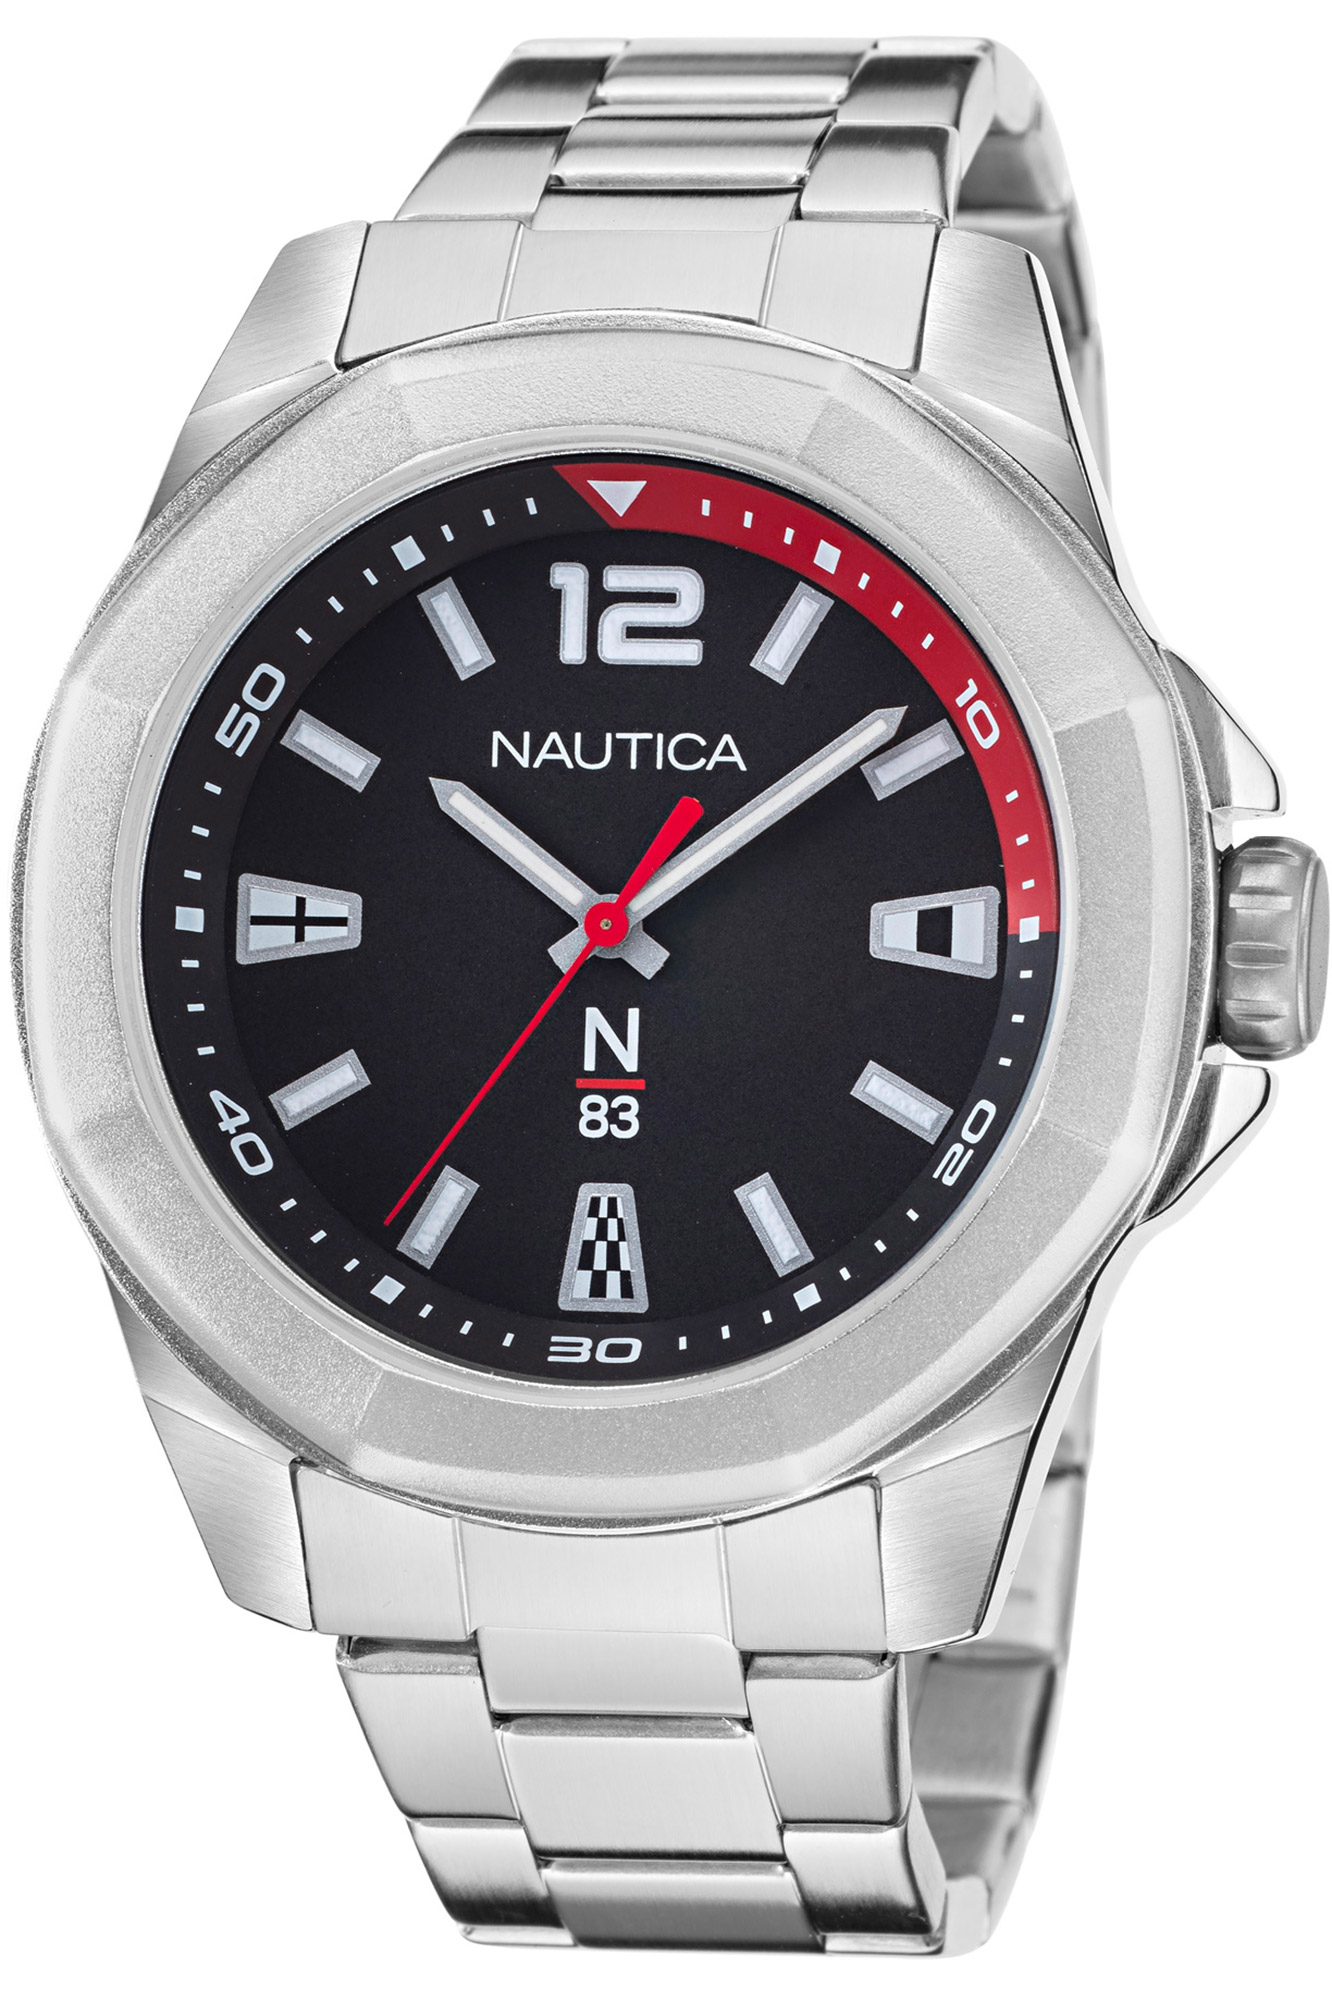 Reloj Nautica naptbf104